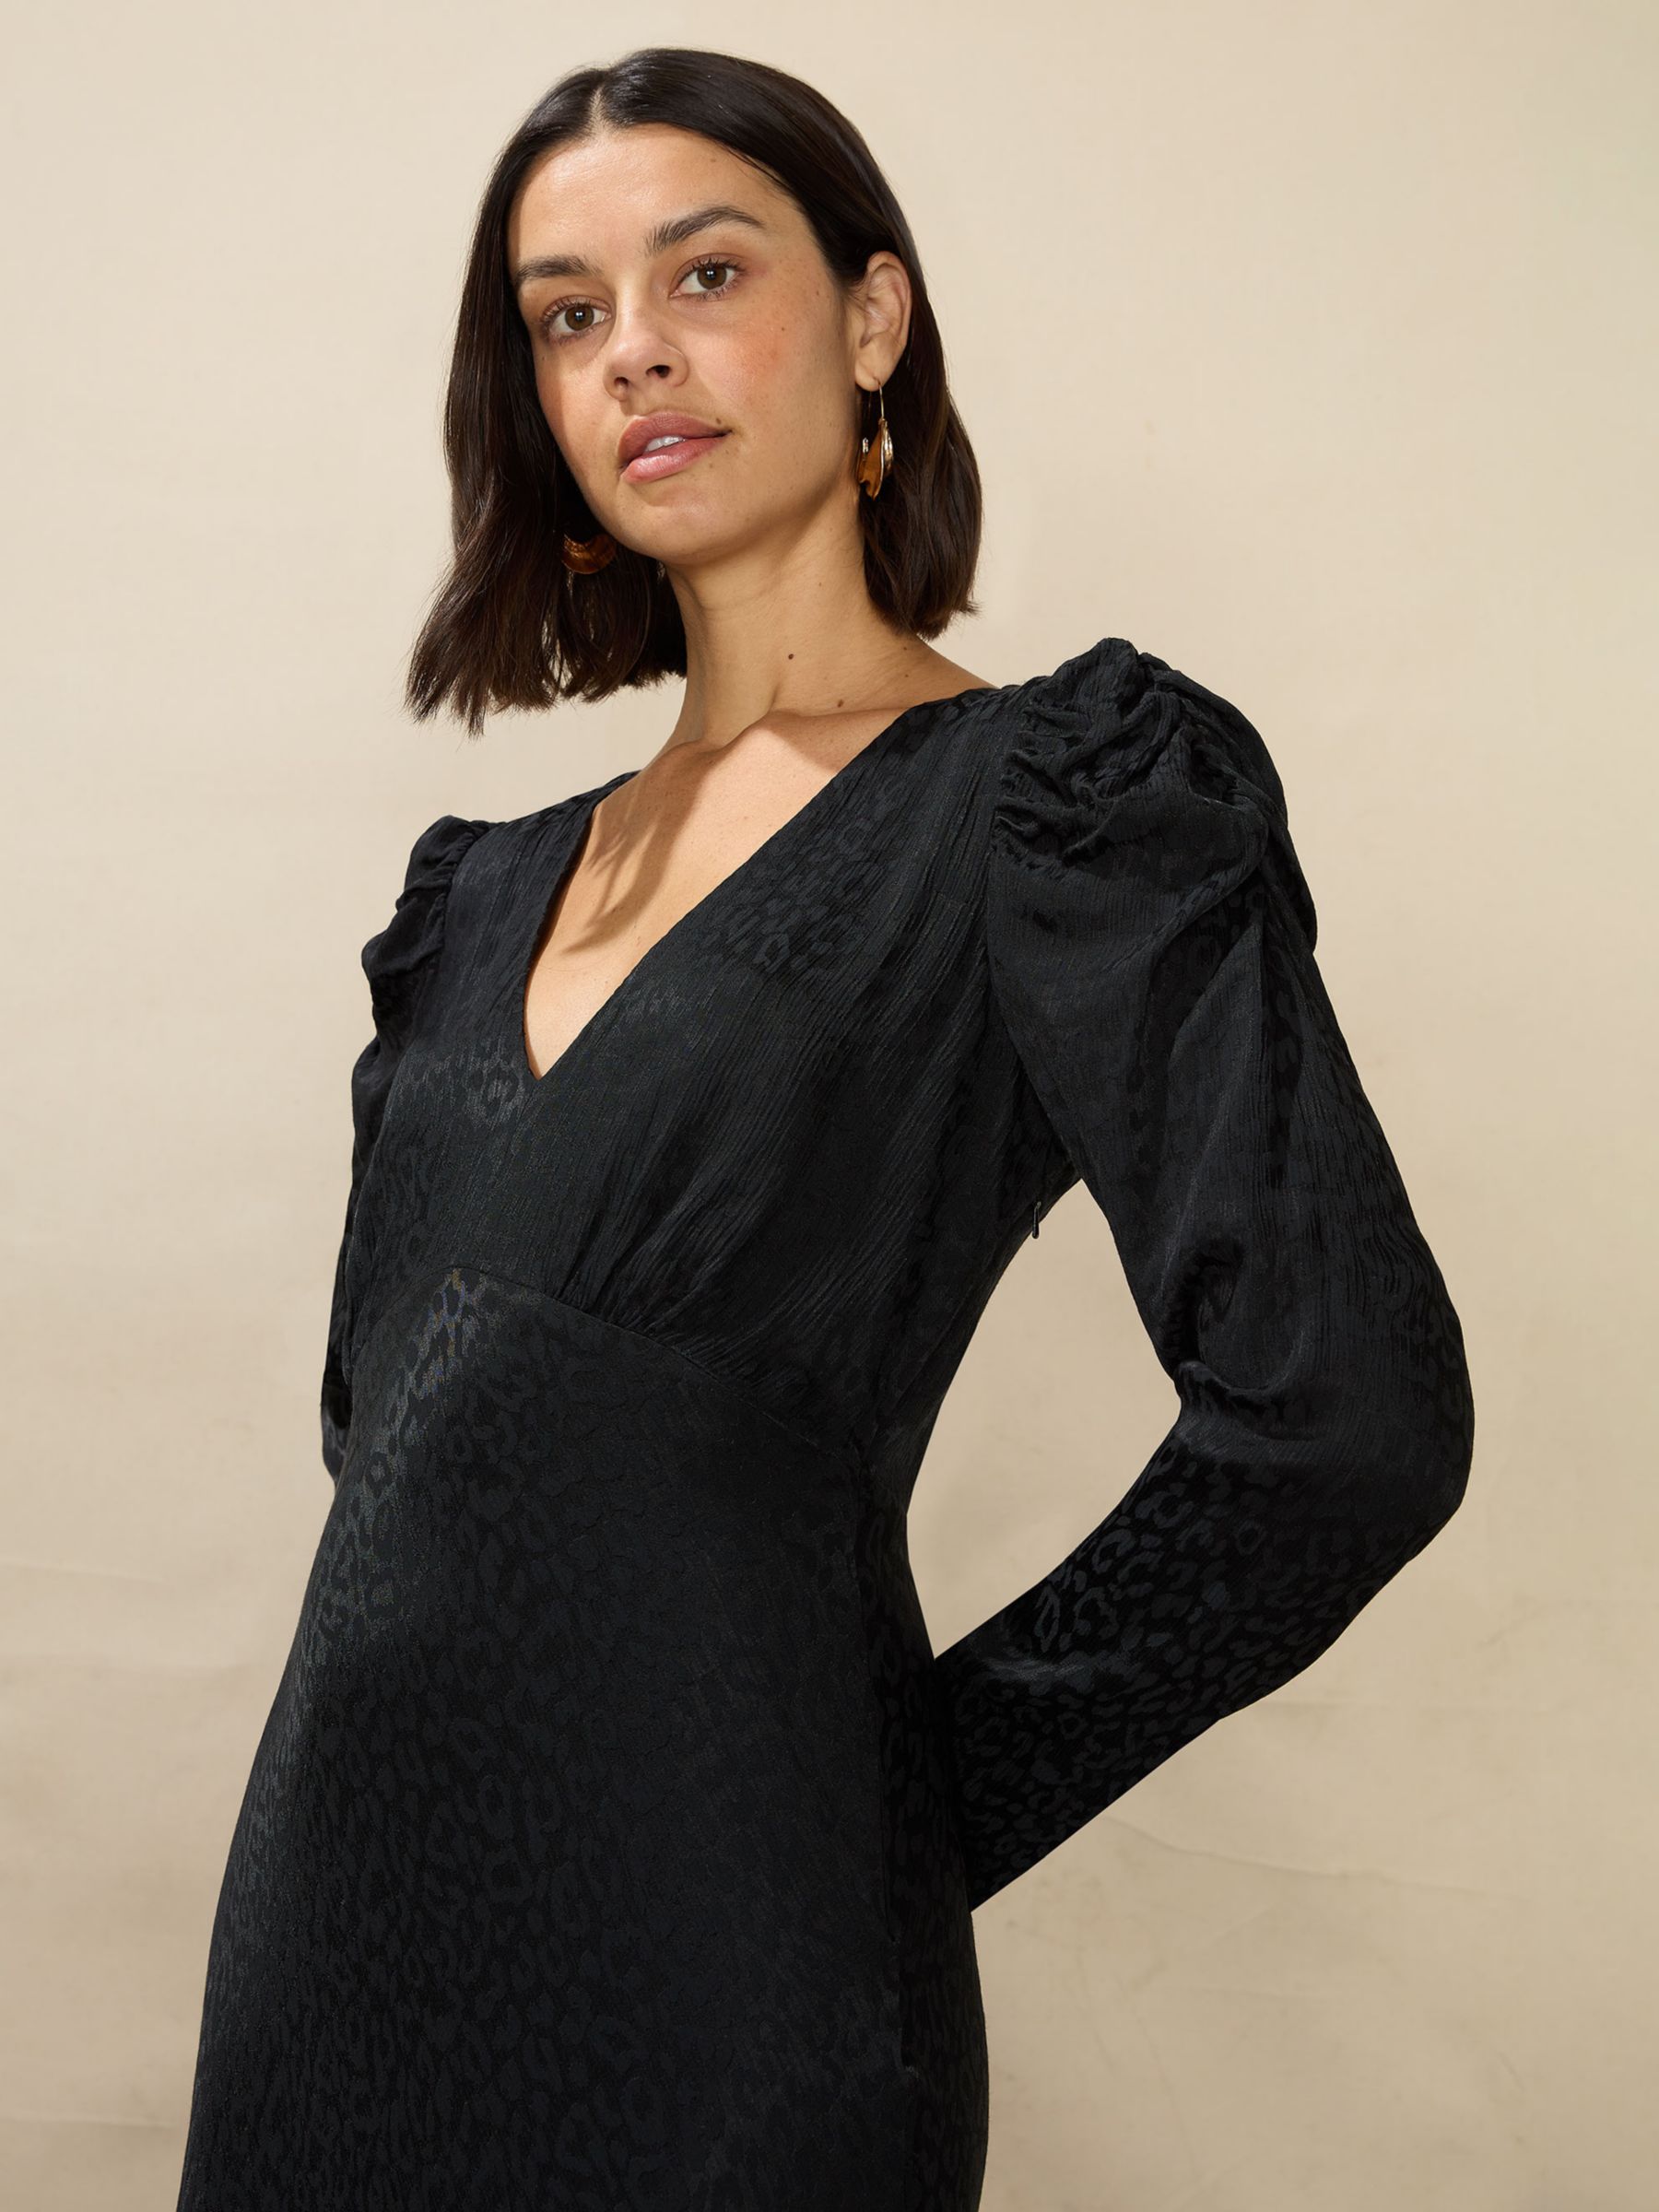 Ro&Zo Petite Satin Jacquard Puff Sleeve Midi Dress, Black, 8